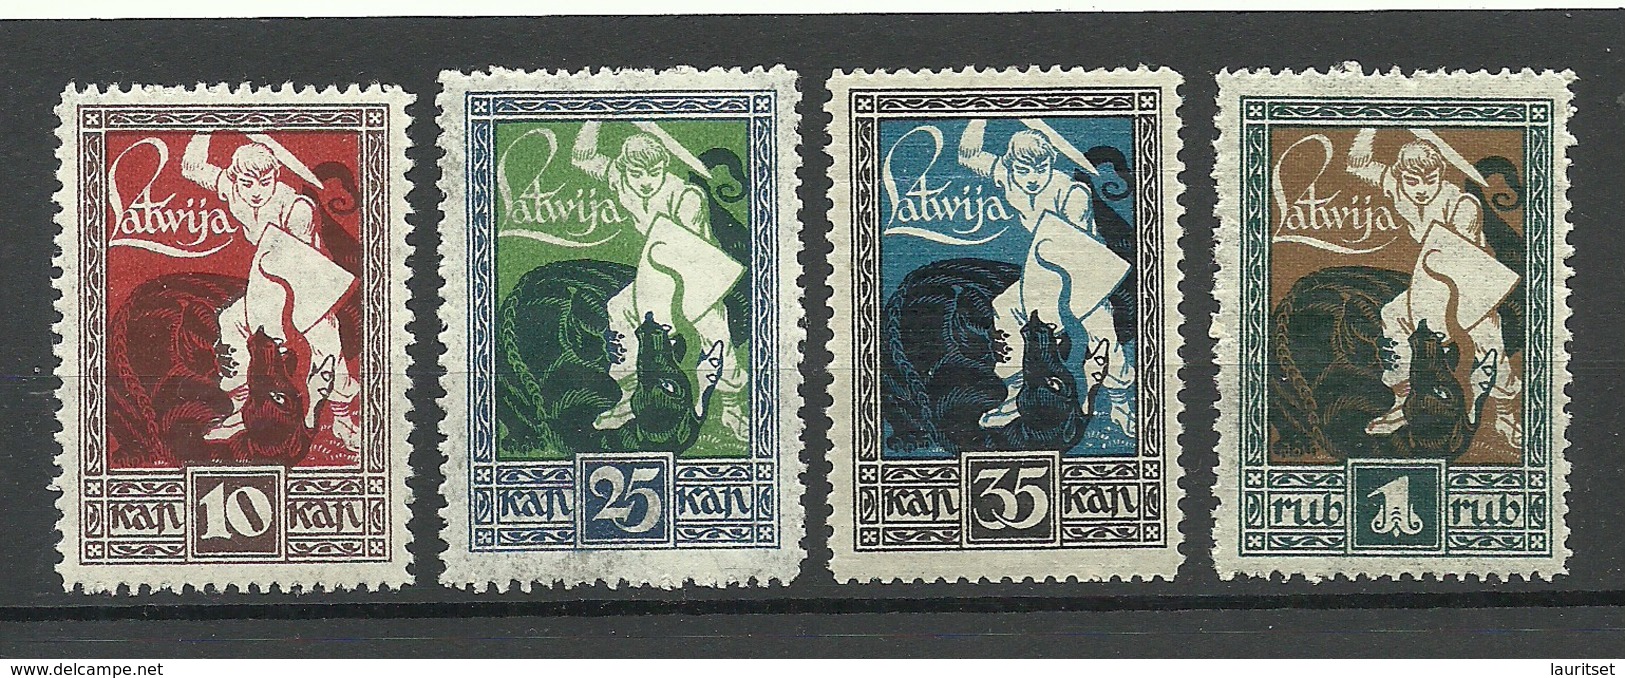 LETTLAND Latvia 1919 Michel 36 - 39 MNH - Latvia